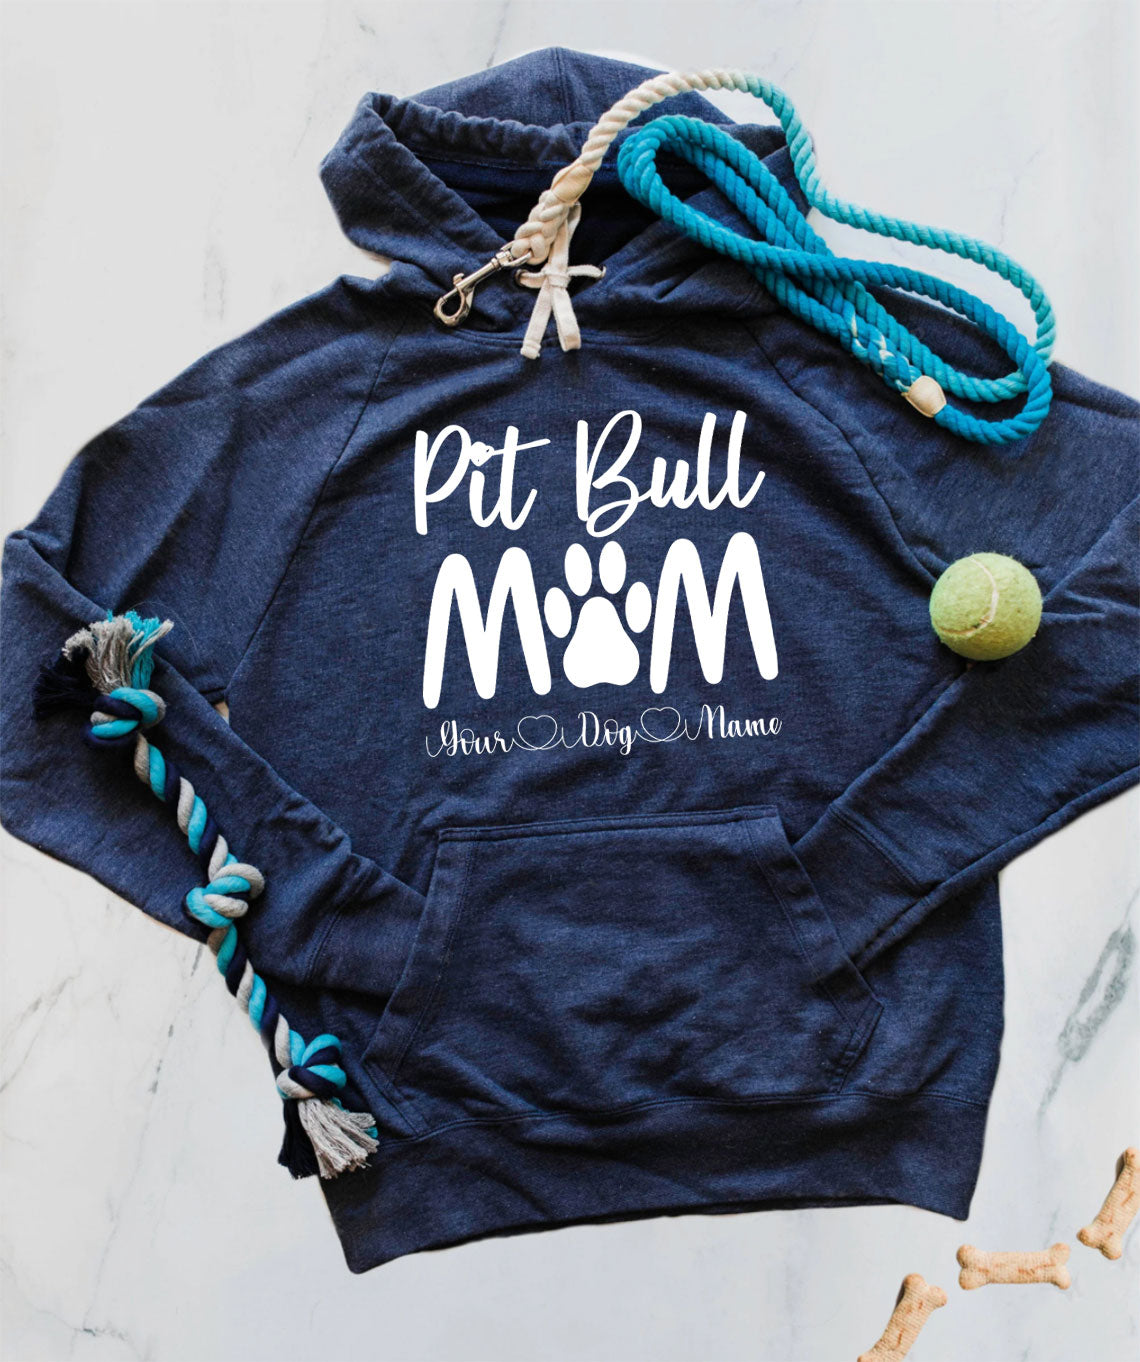 Pitbull Shirt Pitbull Mom Dog Lover Gift Tee by Haselshirt